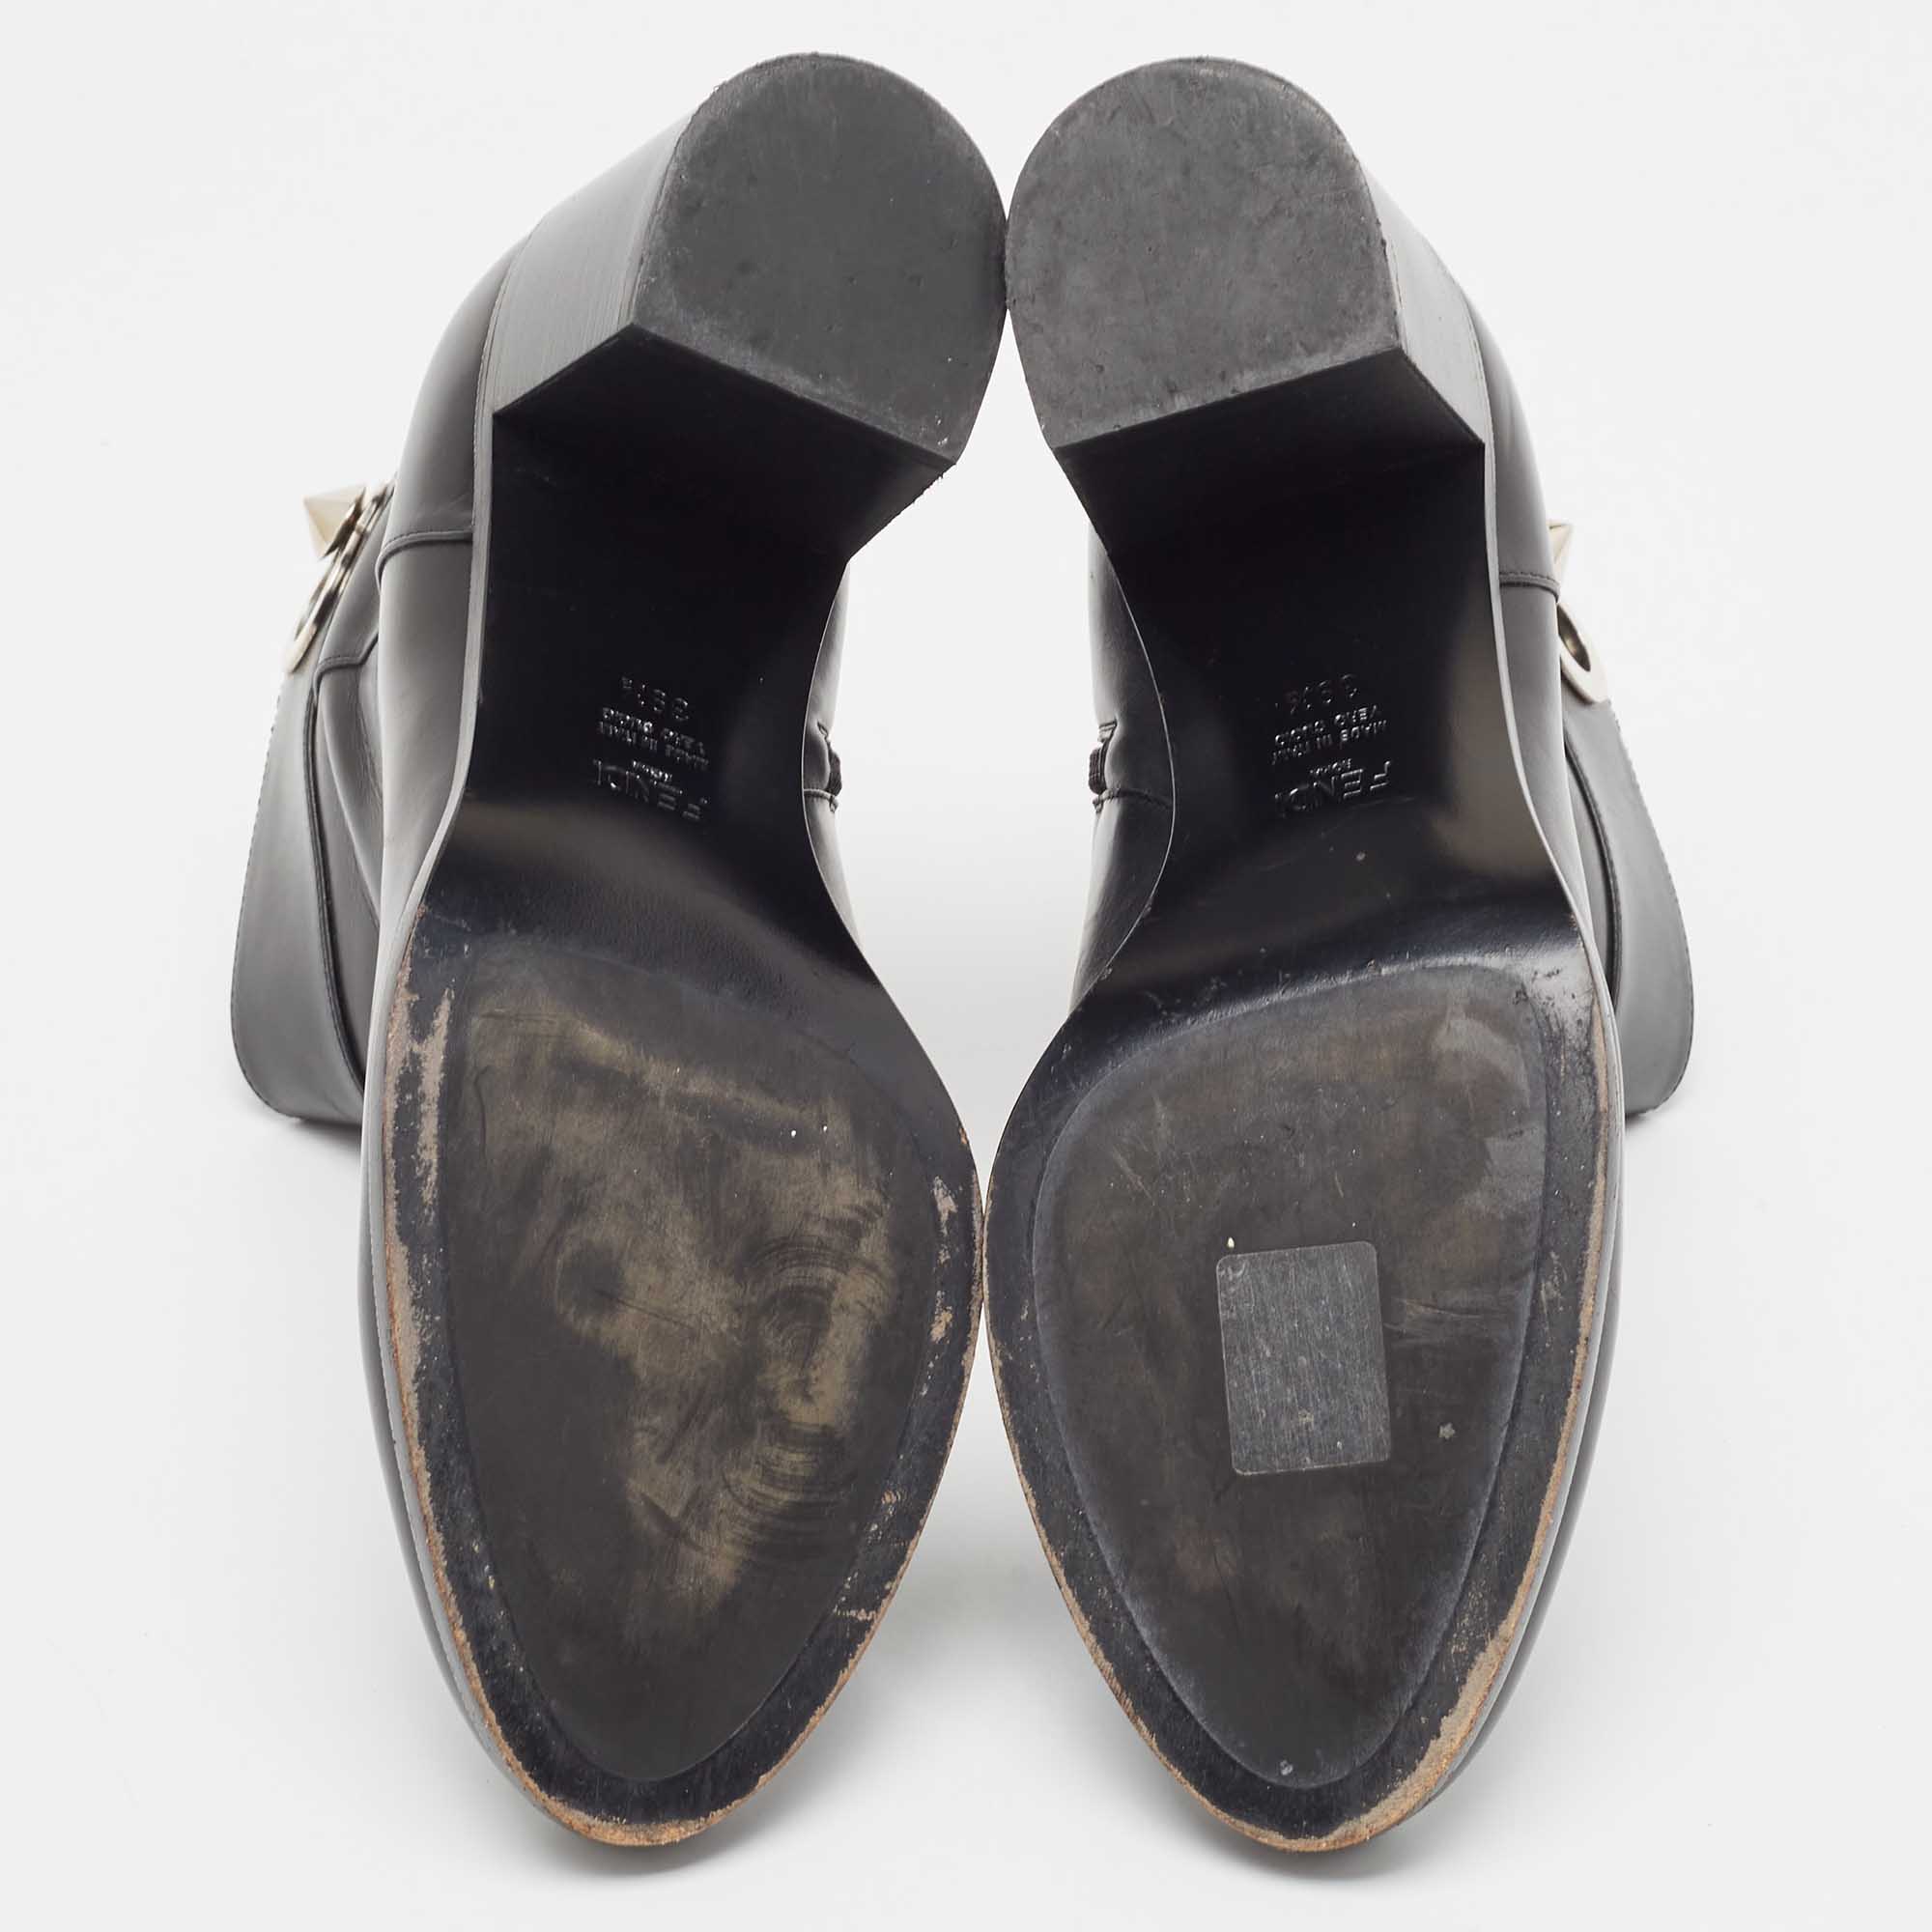 Fendi Black Leather Ankle Boots Size 39.5